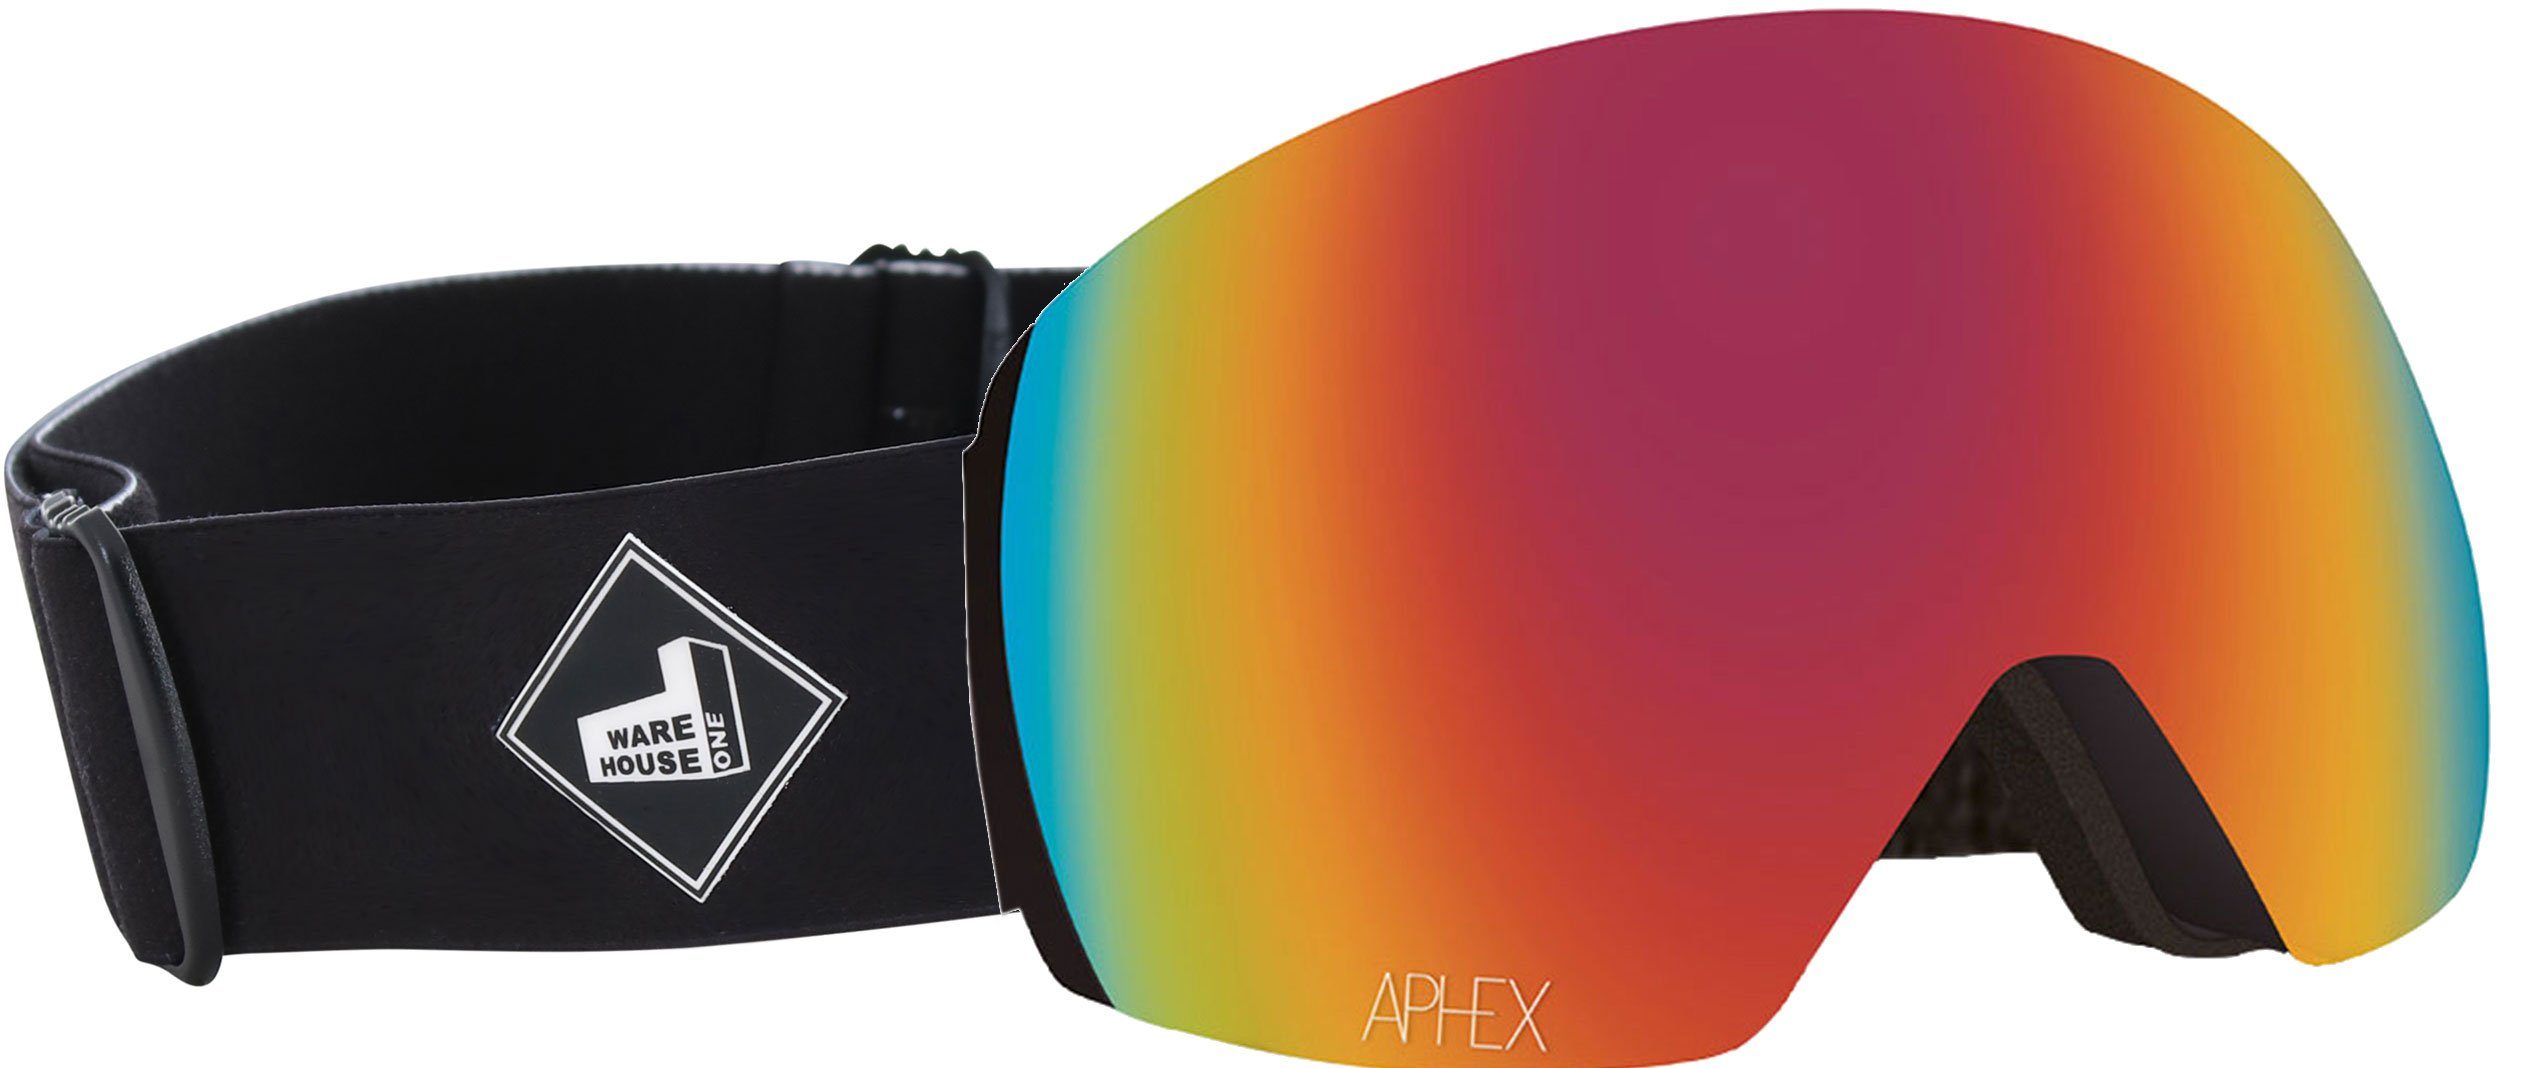 Aphex Snowboardbrille APHEX STYX THE ONE EDITION Magnet Schneebrille black strap red + Glas